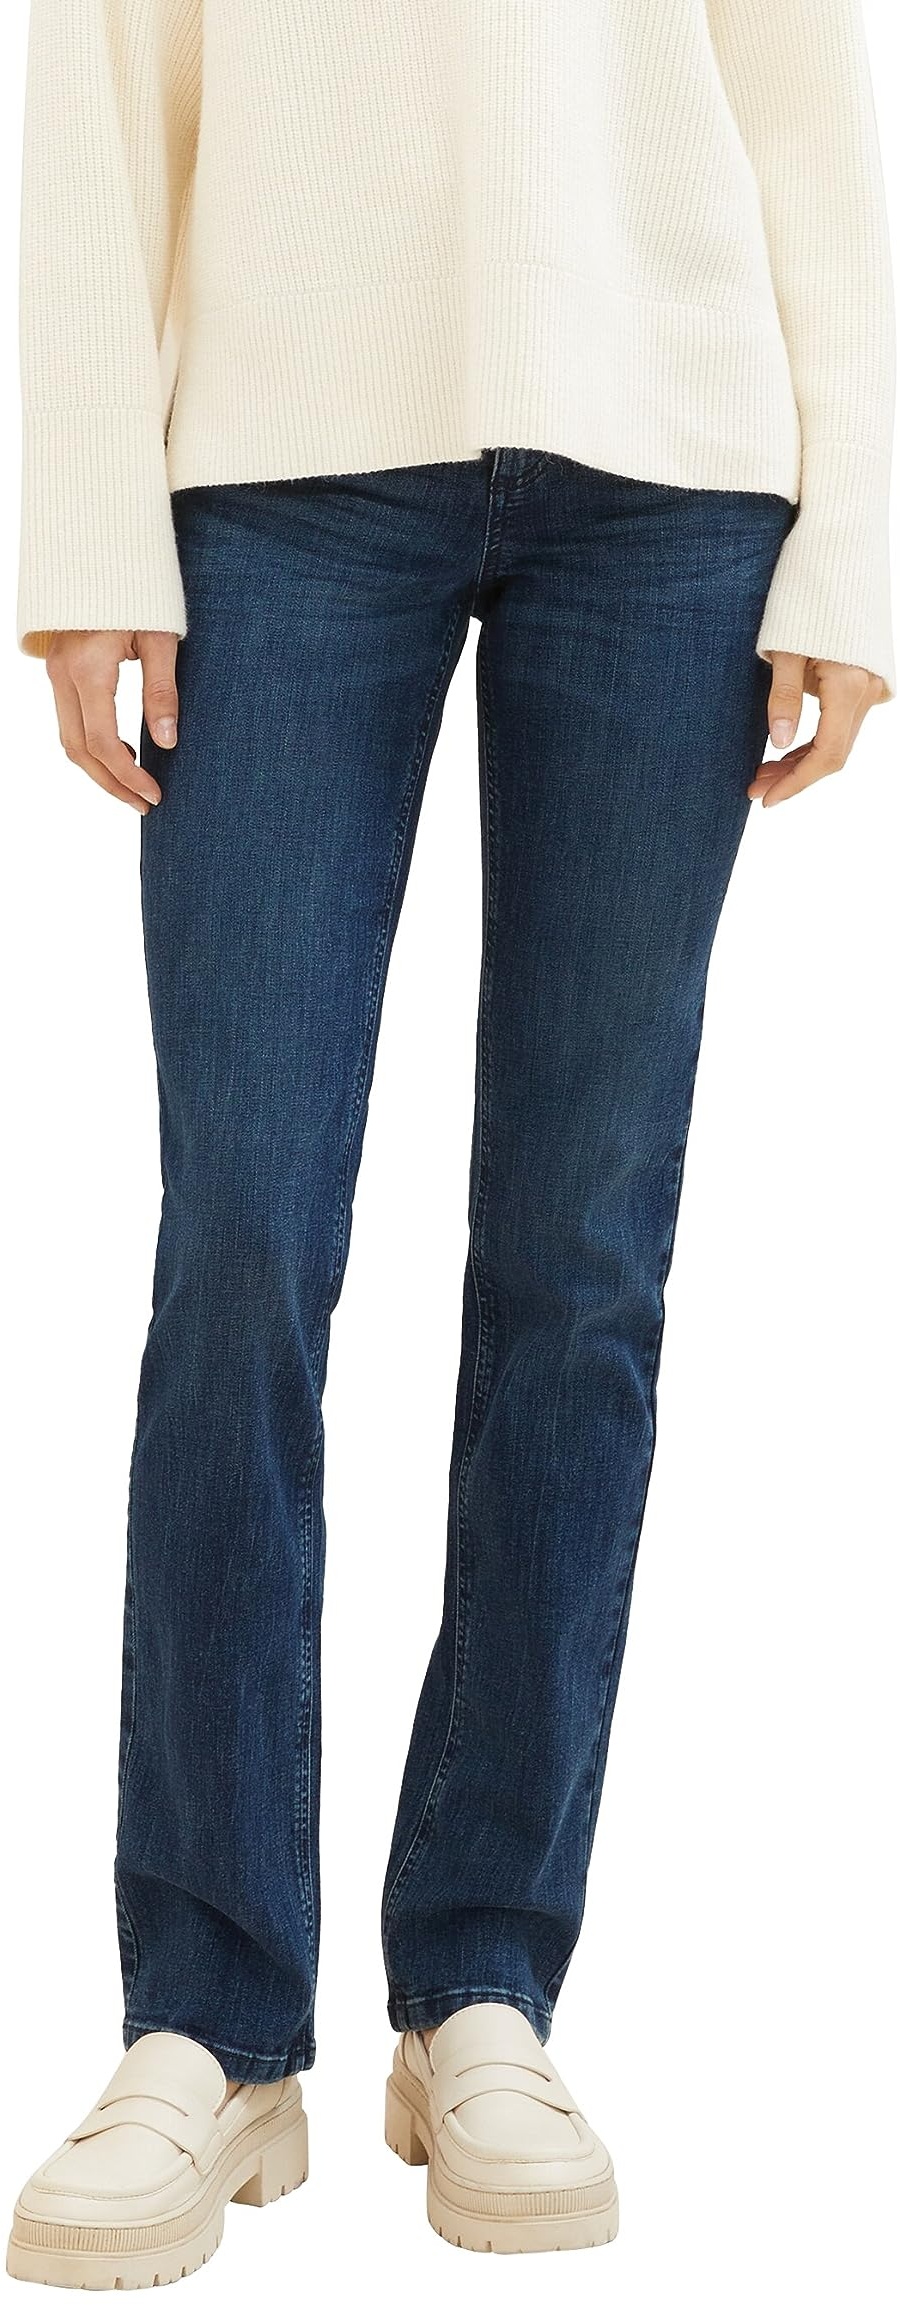 TOM TAILOR Damen 1008119 Alexa Straight Jeans, 10282 - Dark Stone Wash Denim, 29W / 32L EU